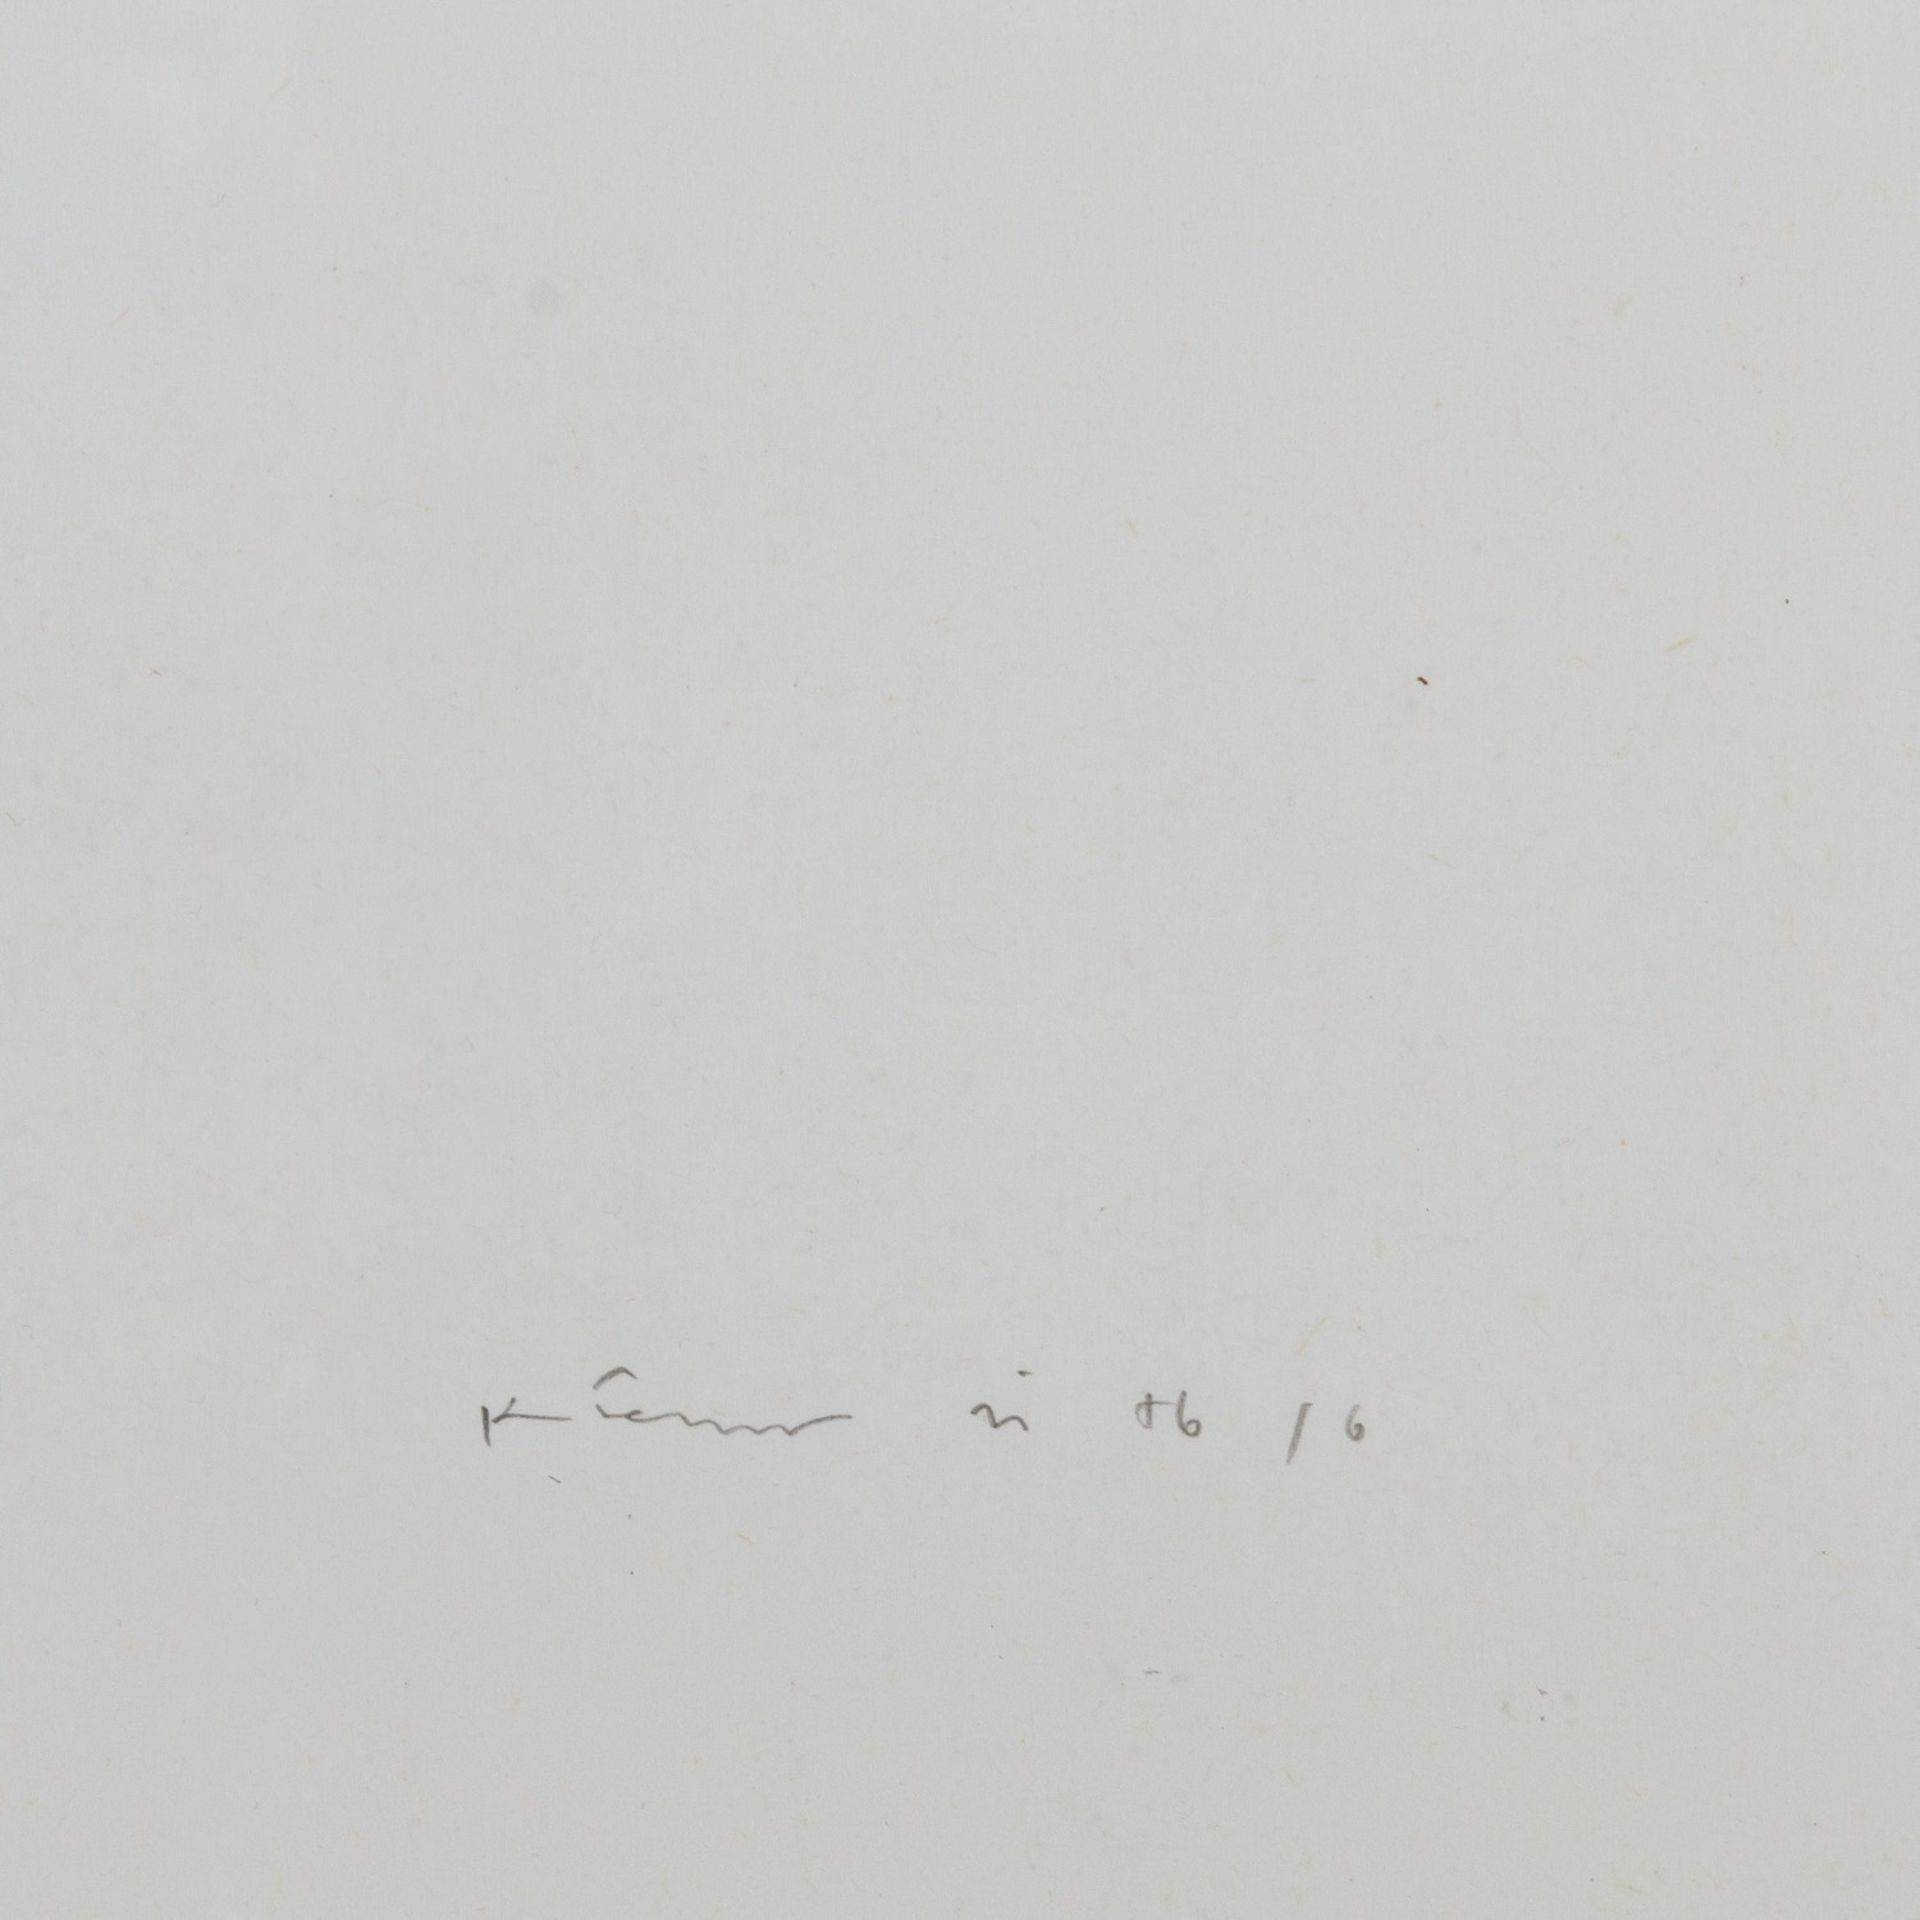 KRENN, OTTMAR (geb. 1952), kontruktivistische Komposition, 1976, - Bild 3 aus 5